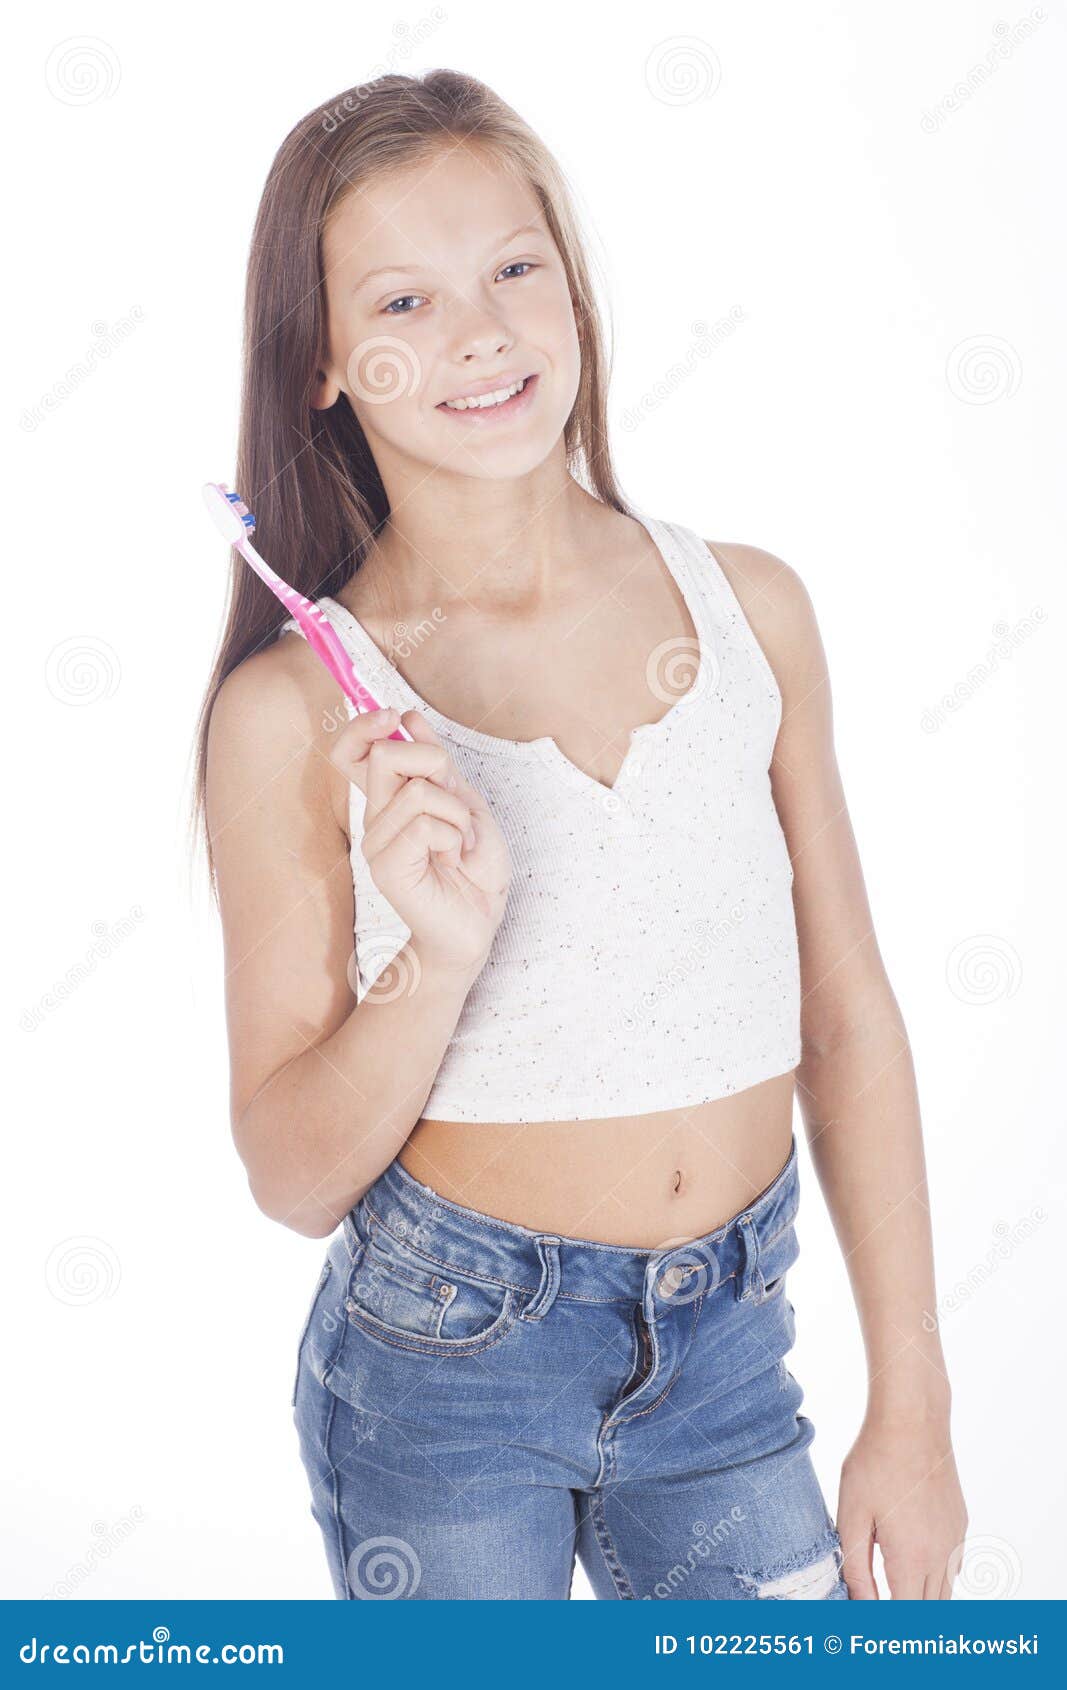 young girl is brushing her teeth.